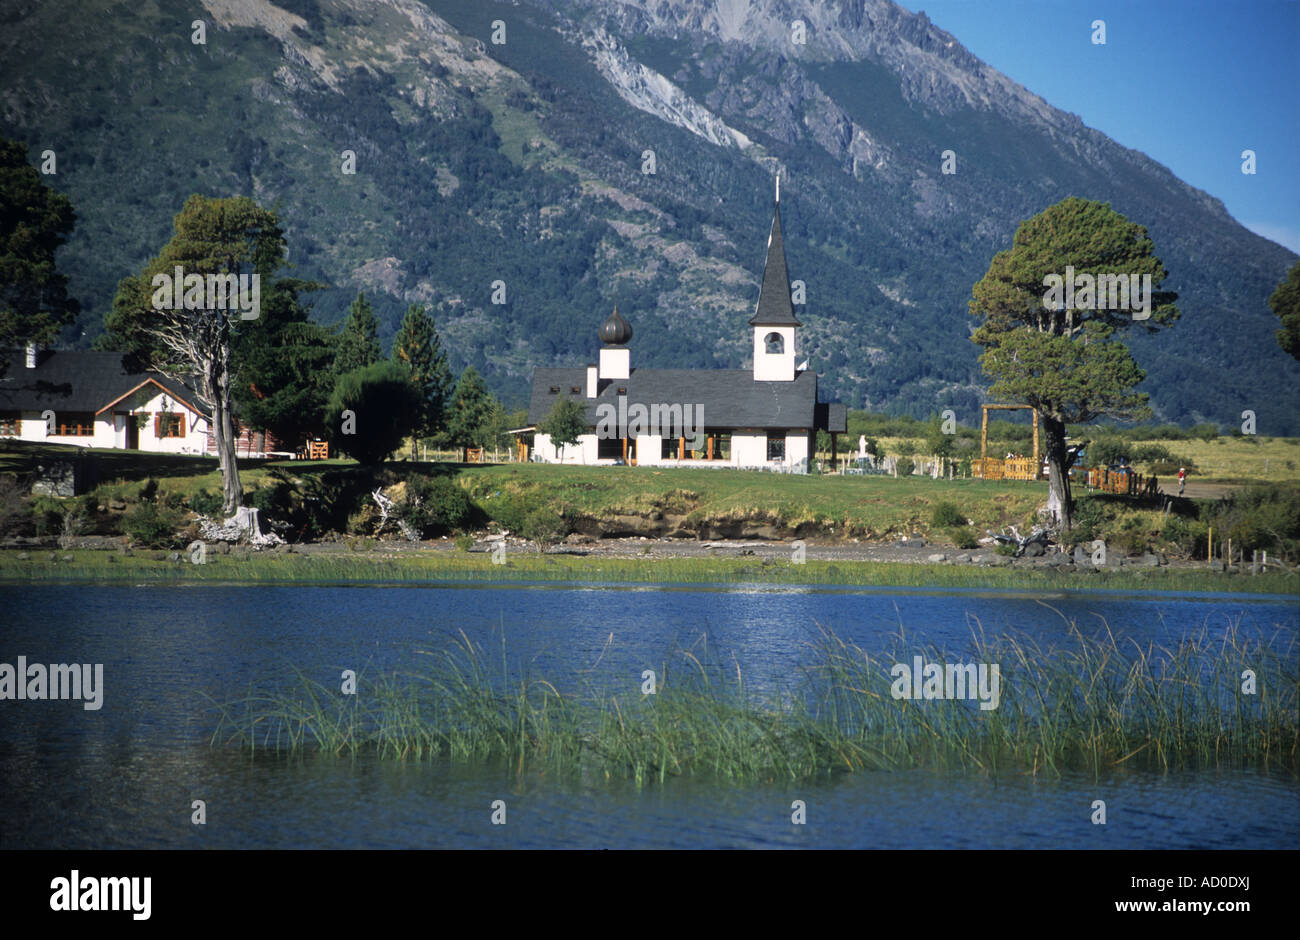 Alpine style church next to Lake Paimun, Lanin National Park, Neuquen Province, Argentina Stock Photo